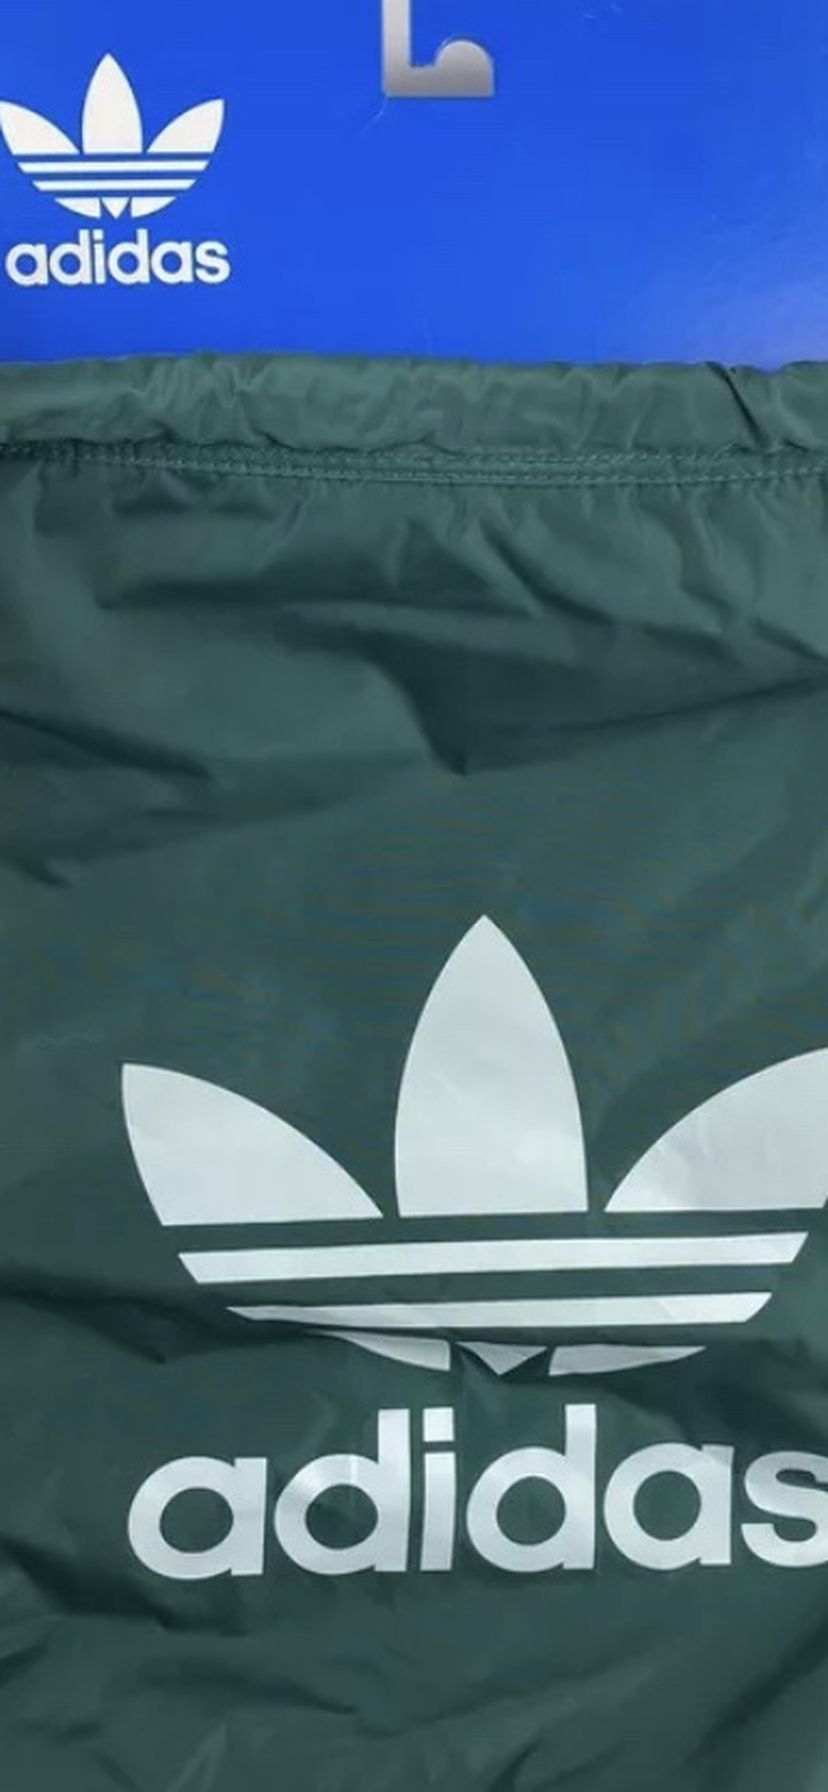 Adidas Unisex Original Trefoil Gym/Travel Sackpack One Size Green White